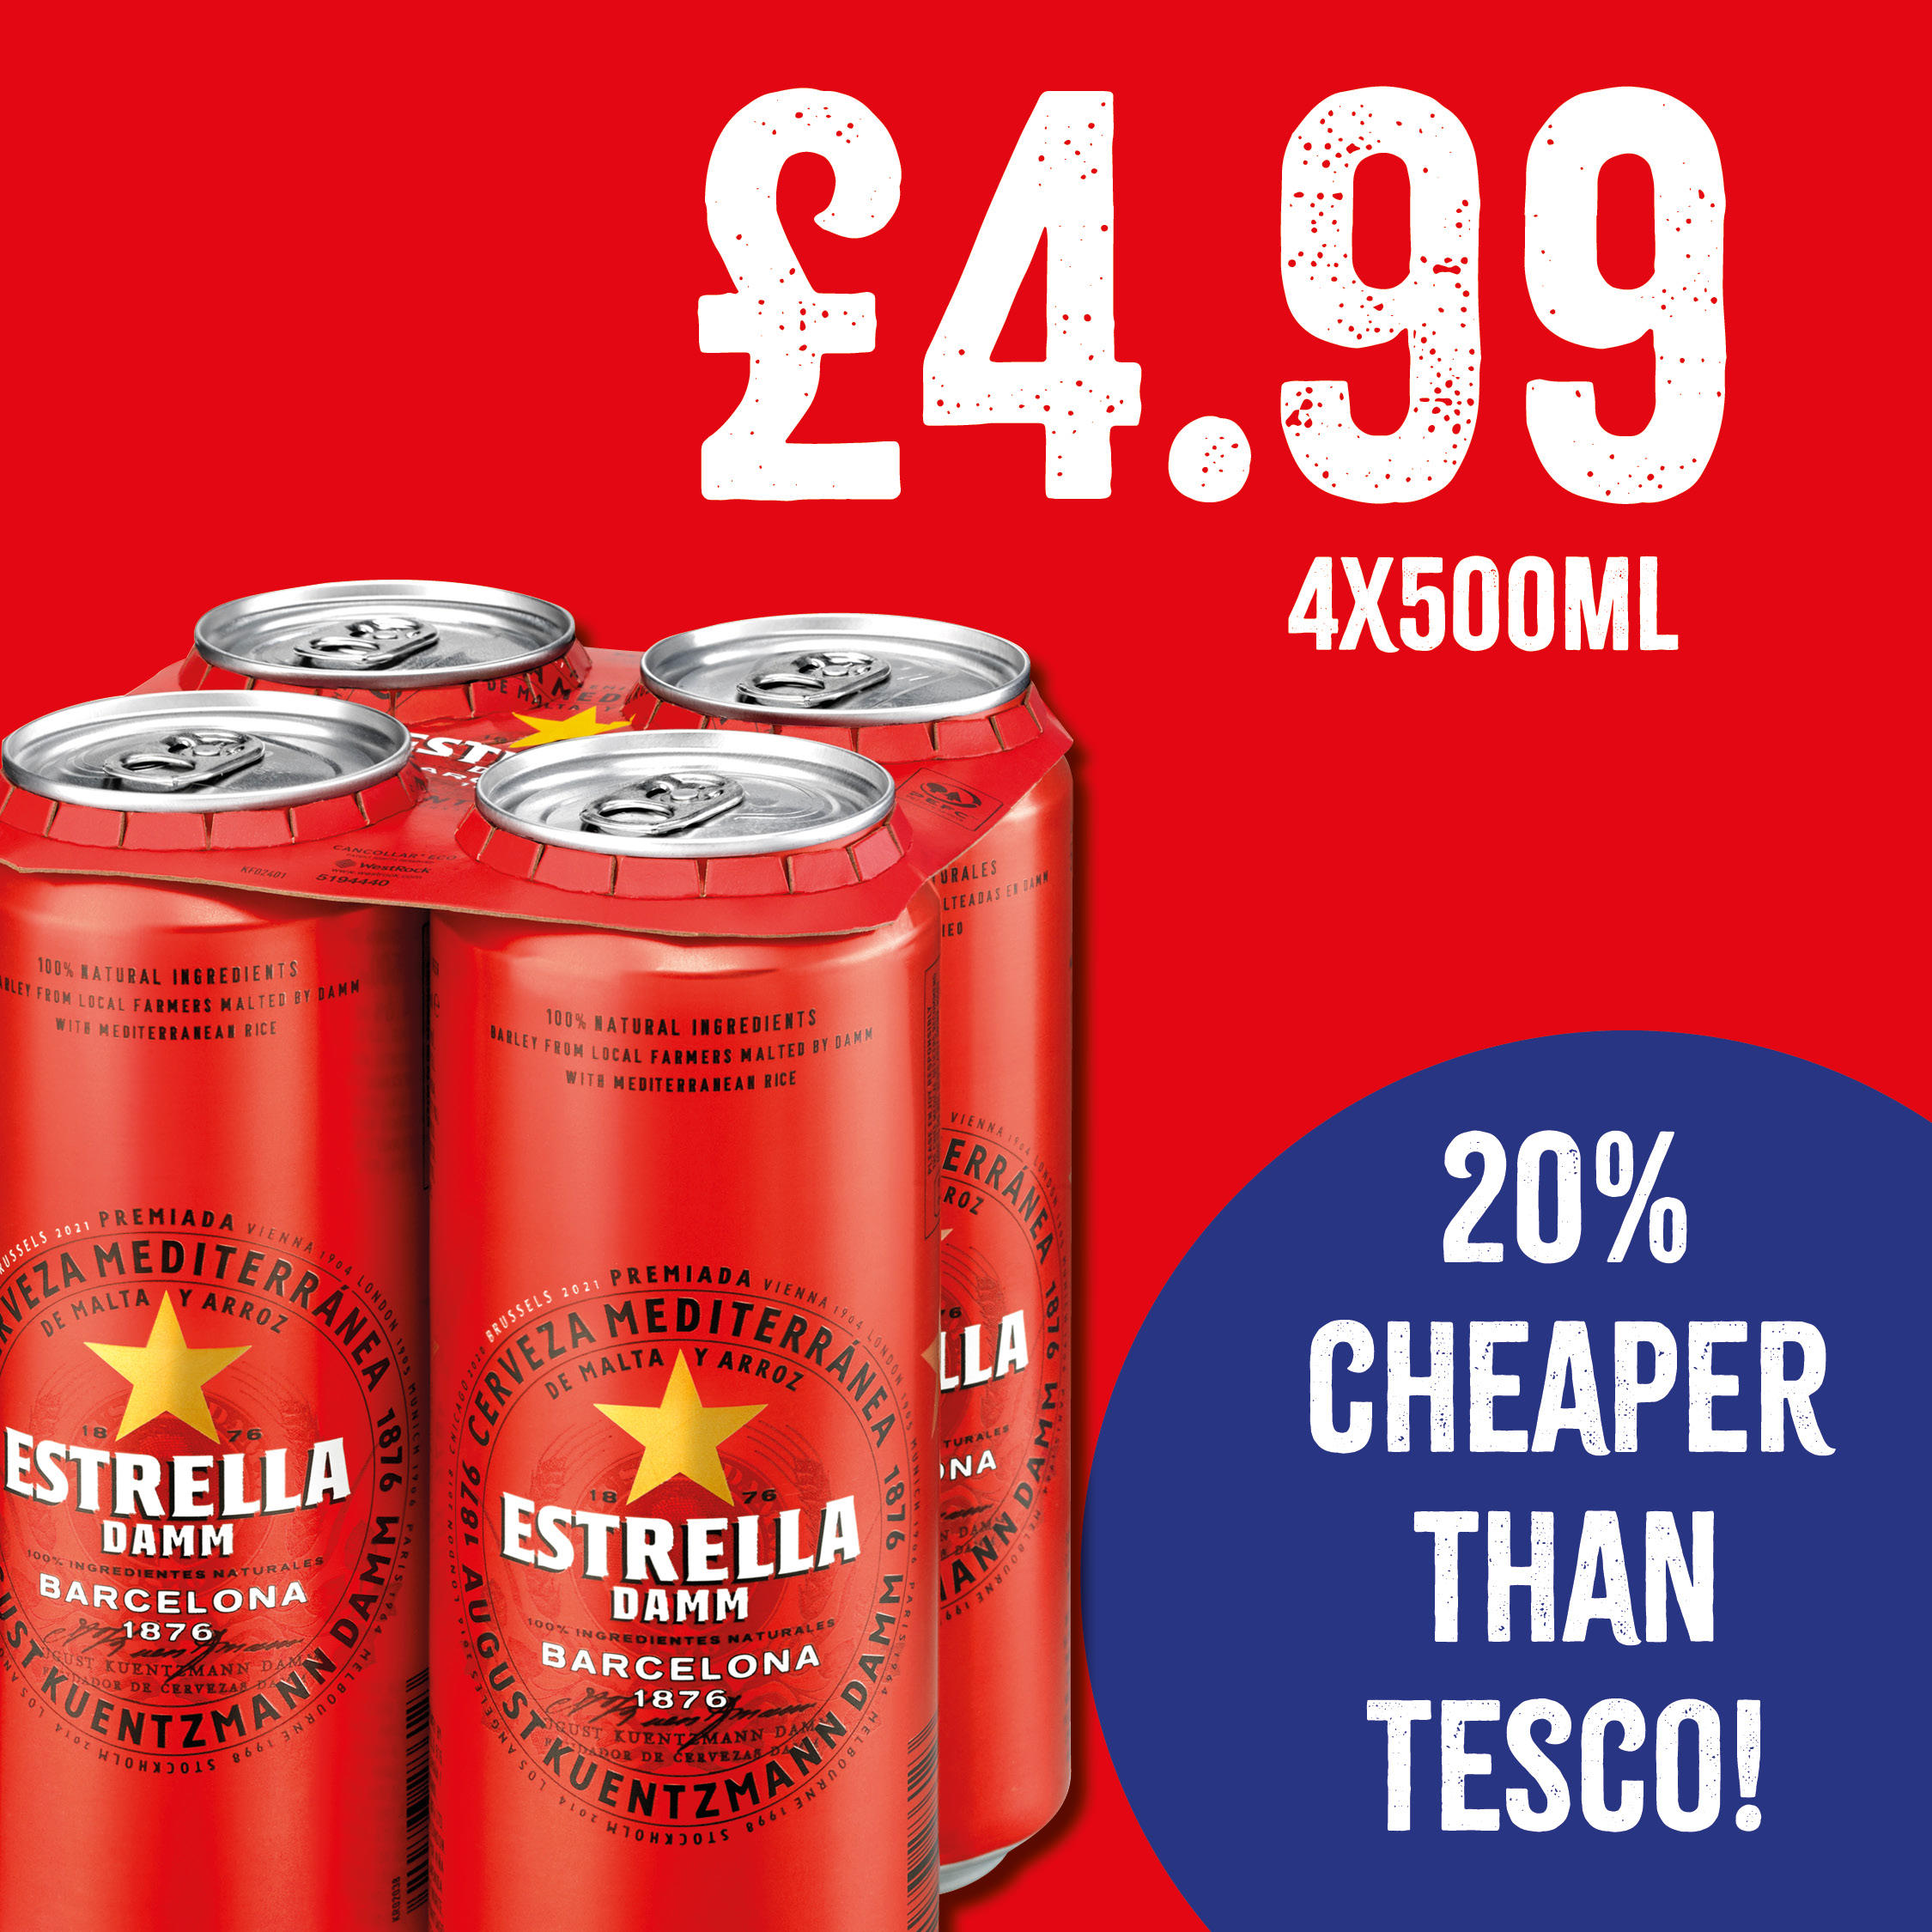 Estrella 4 x 500ml - Only £4.99 
20% Cheaper than Tesco Bargain Booze Leyland 01772 624595